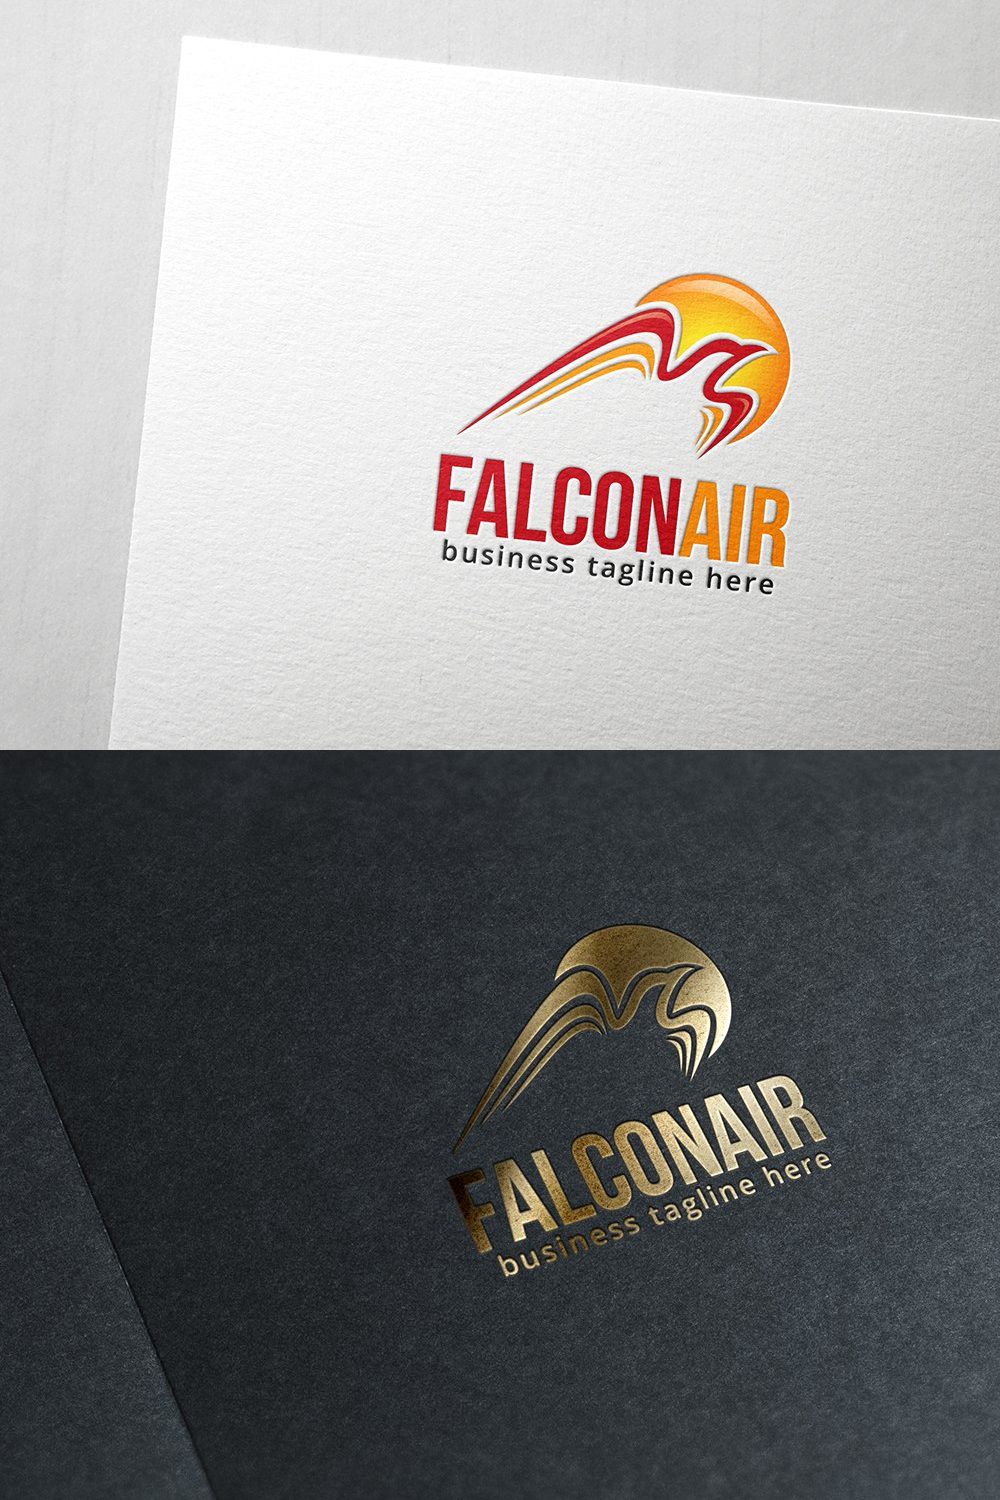 Falcon Air Logo pinterest preview image.